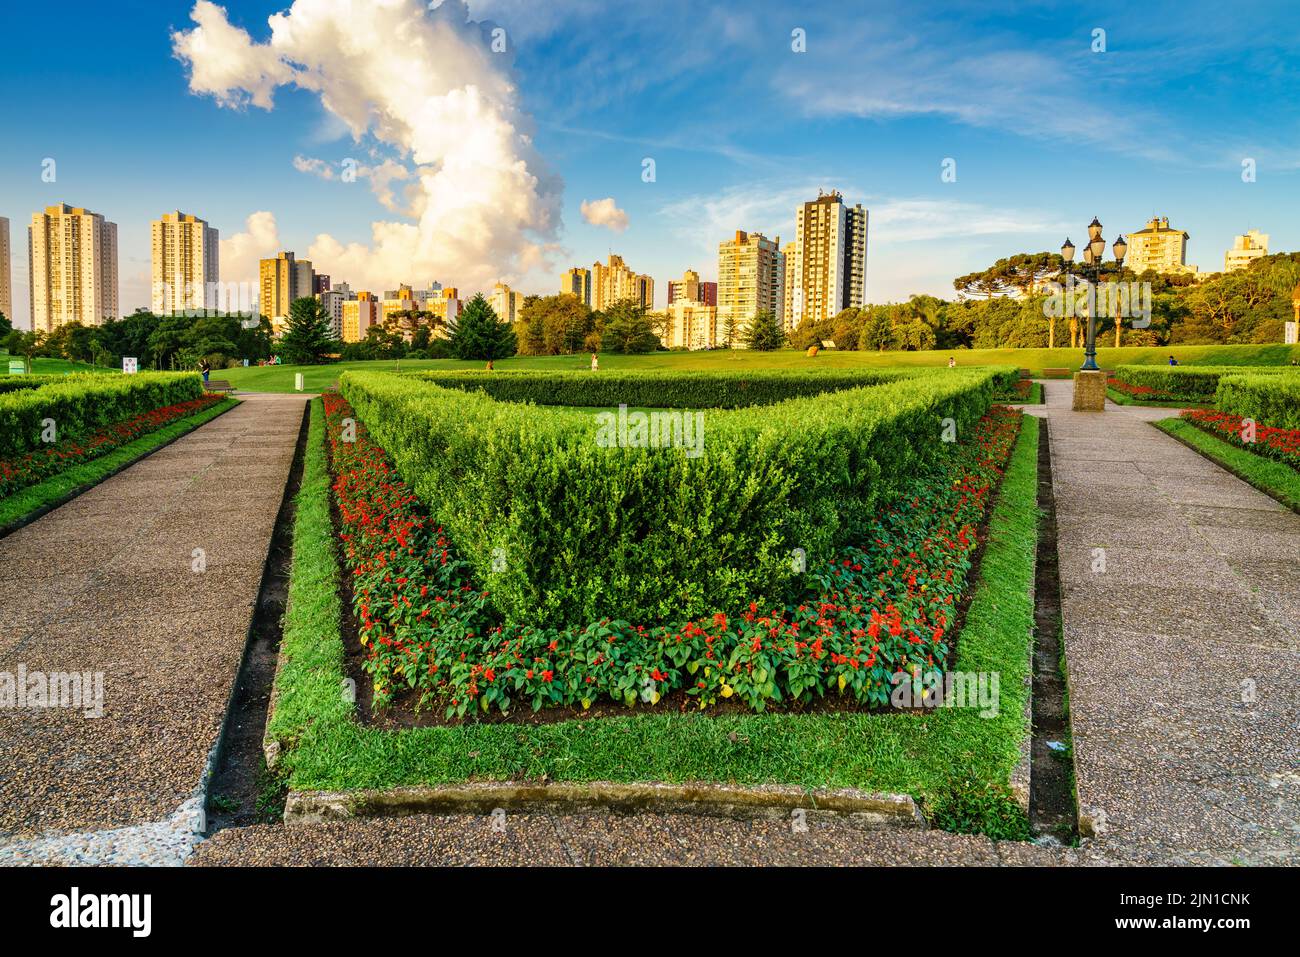 Botanical garden of Curitiba and surrounding neighborhoods, Brazil Stock Photo